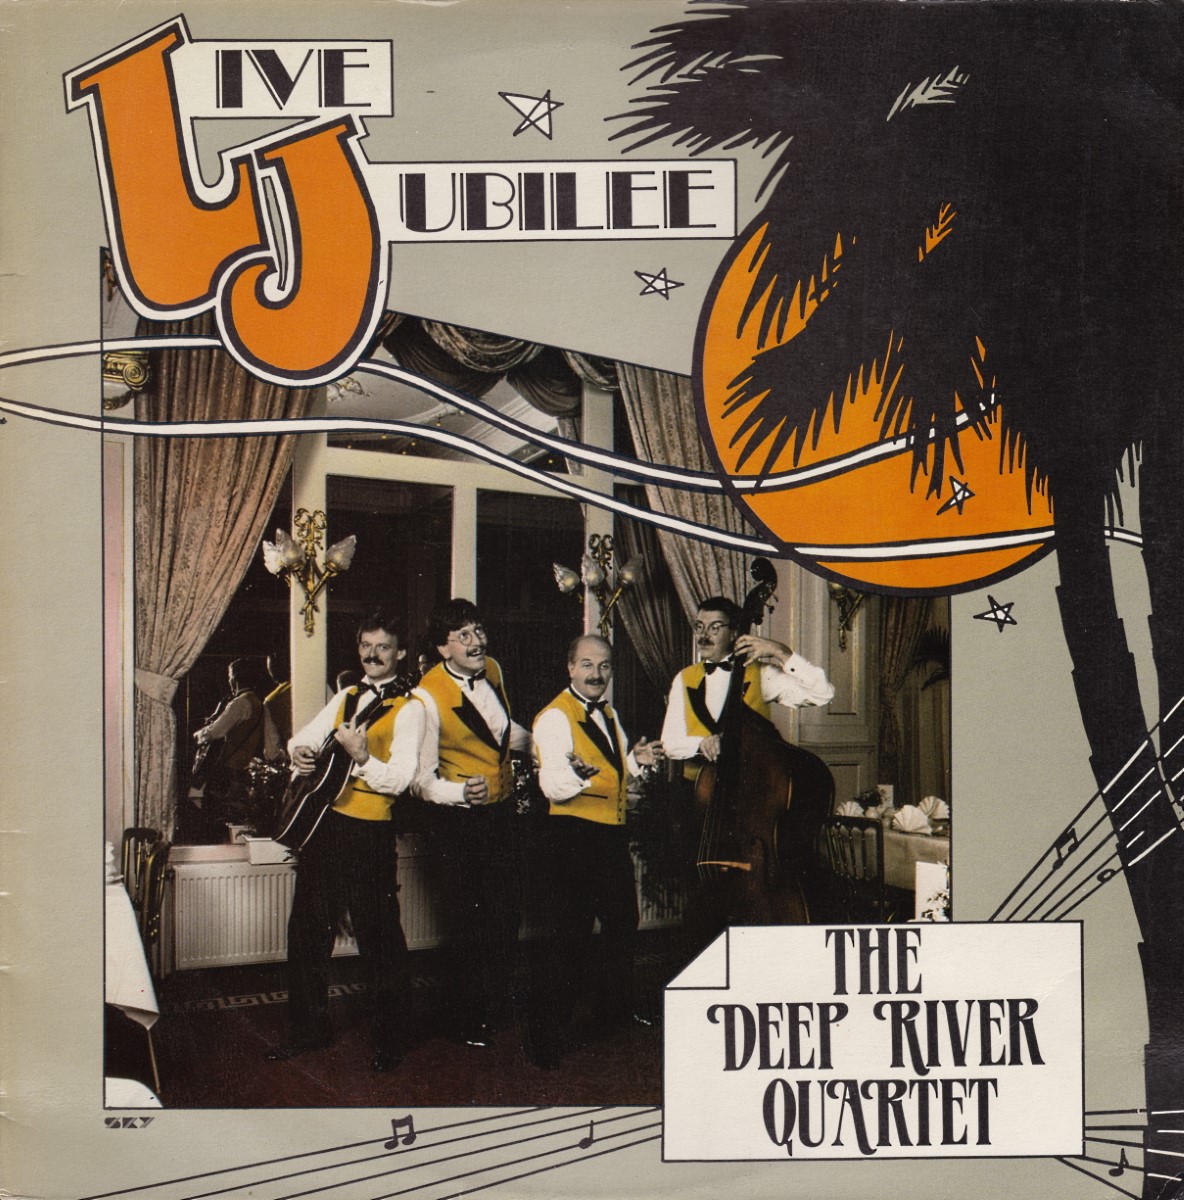 The Deep River Quartet - Live Jubilee (1986)